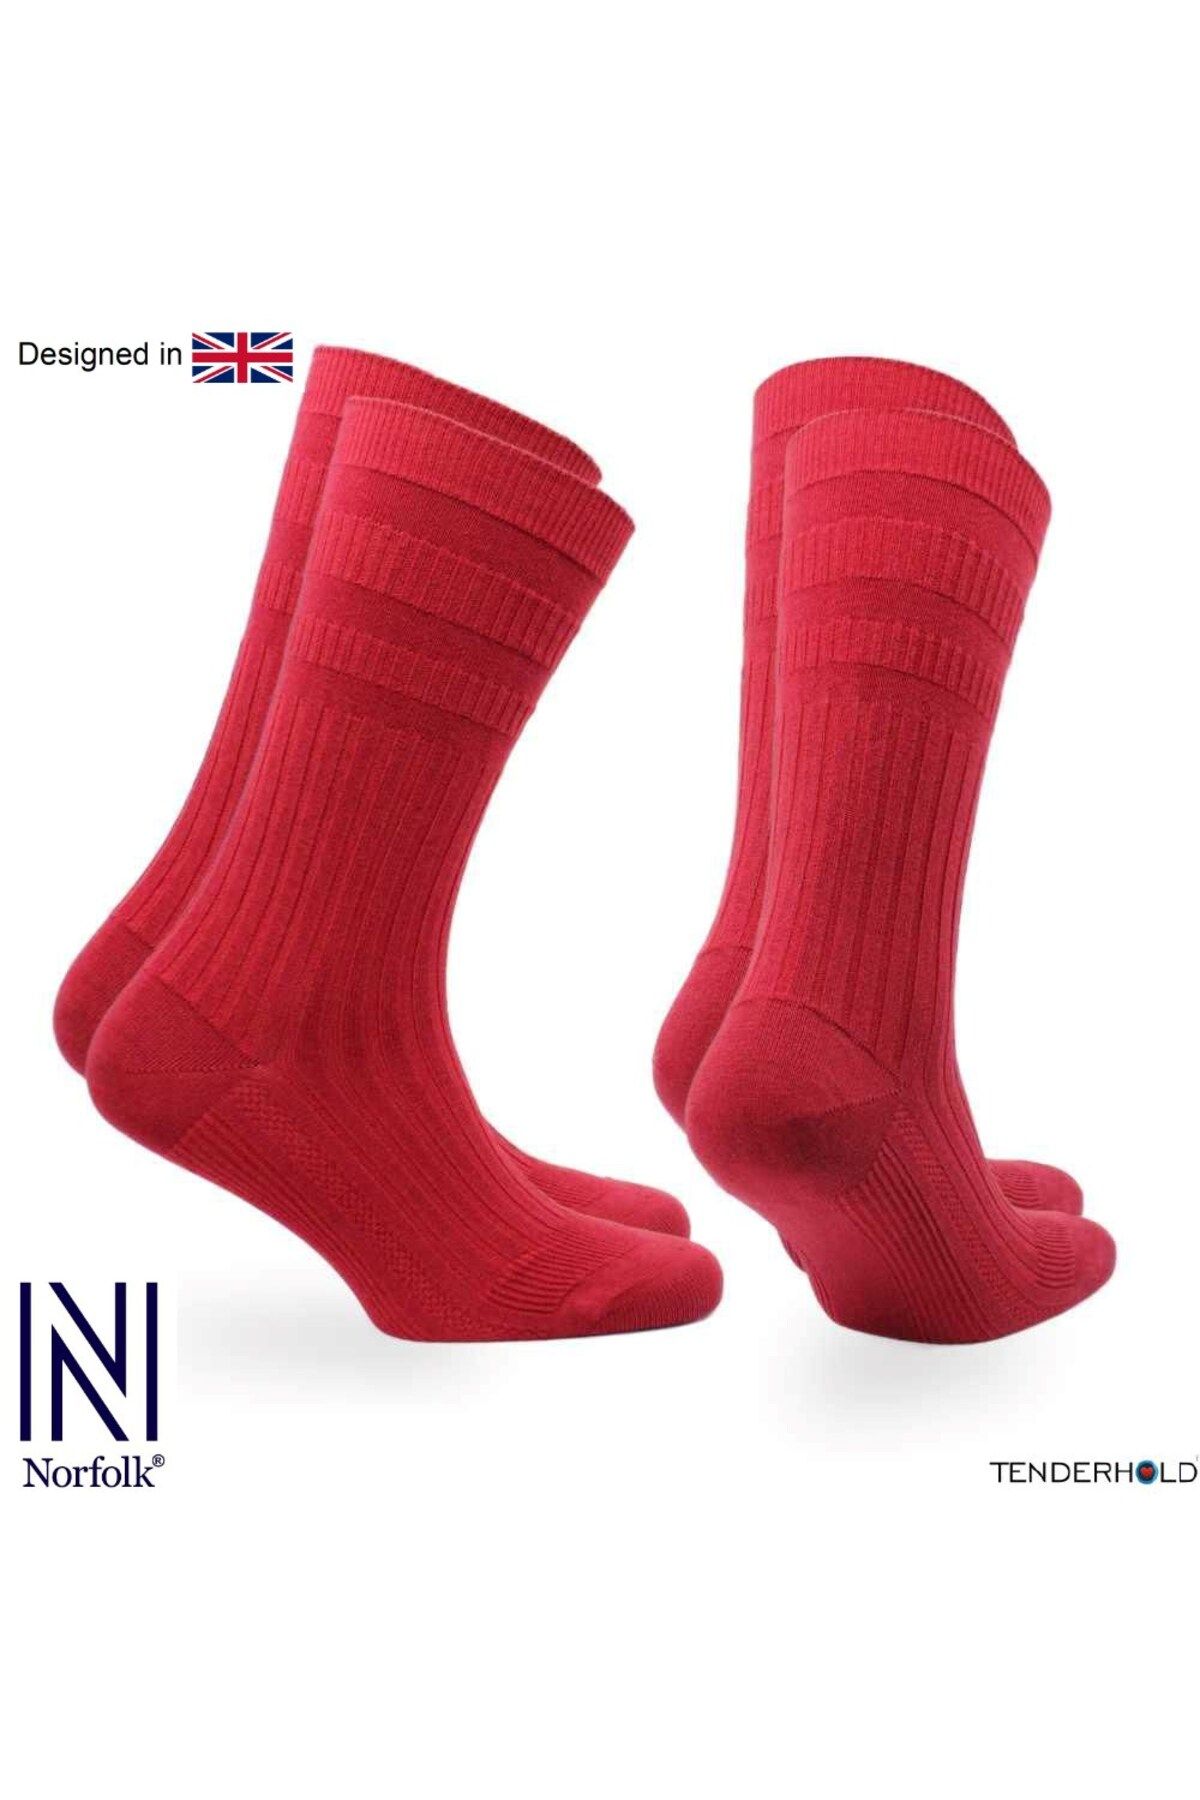 Norfolk JOSEPH Comfort Fit Tenderhold Pamuklu Diyabet Çorabı 2'li Paket